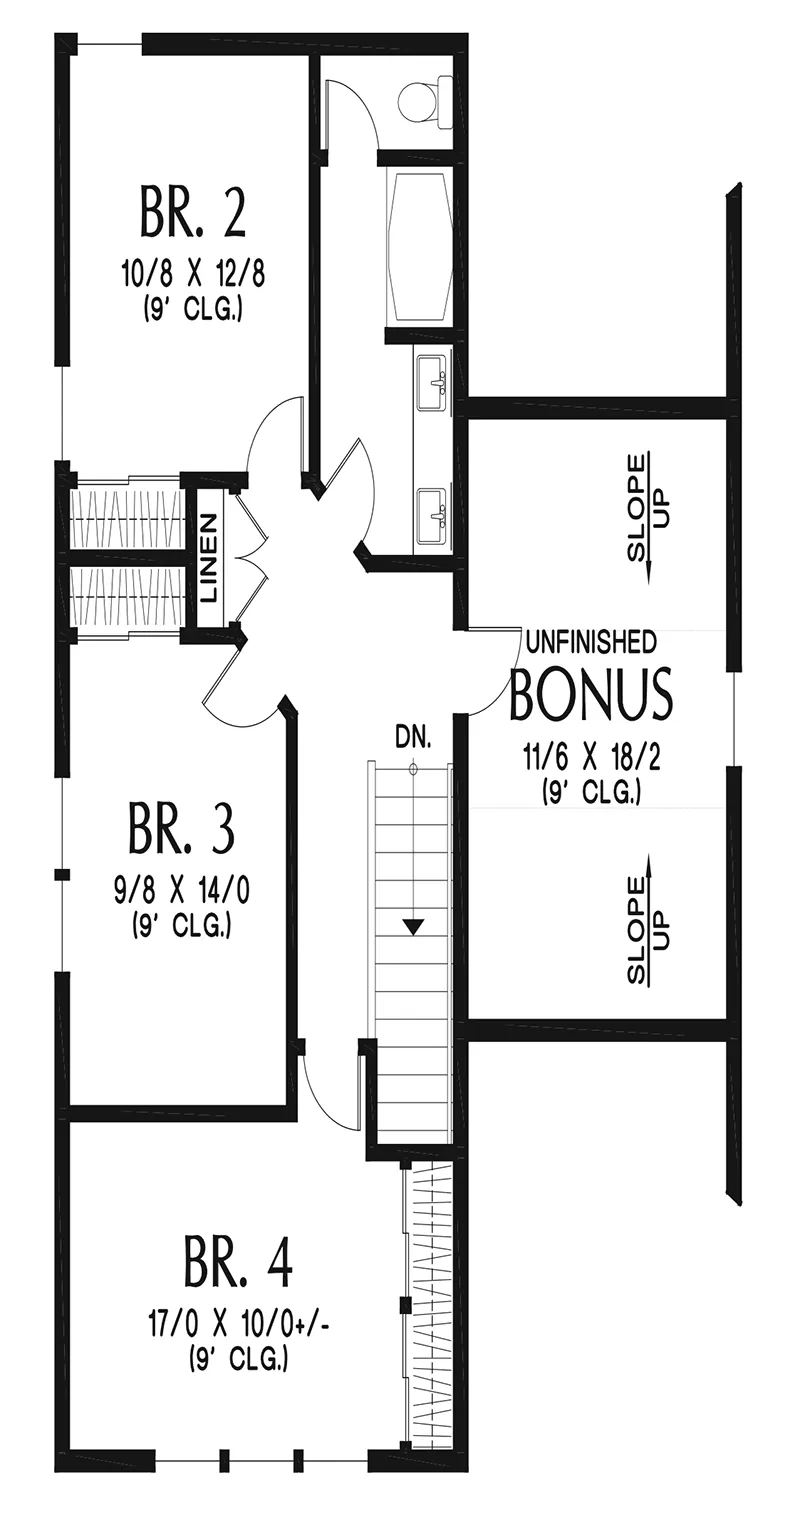 Farmhouse Plan Second Floor - 011D-0715 - Shop House Plans and More